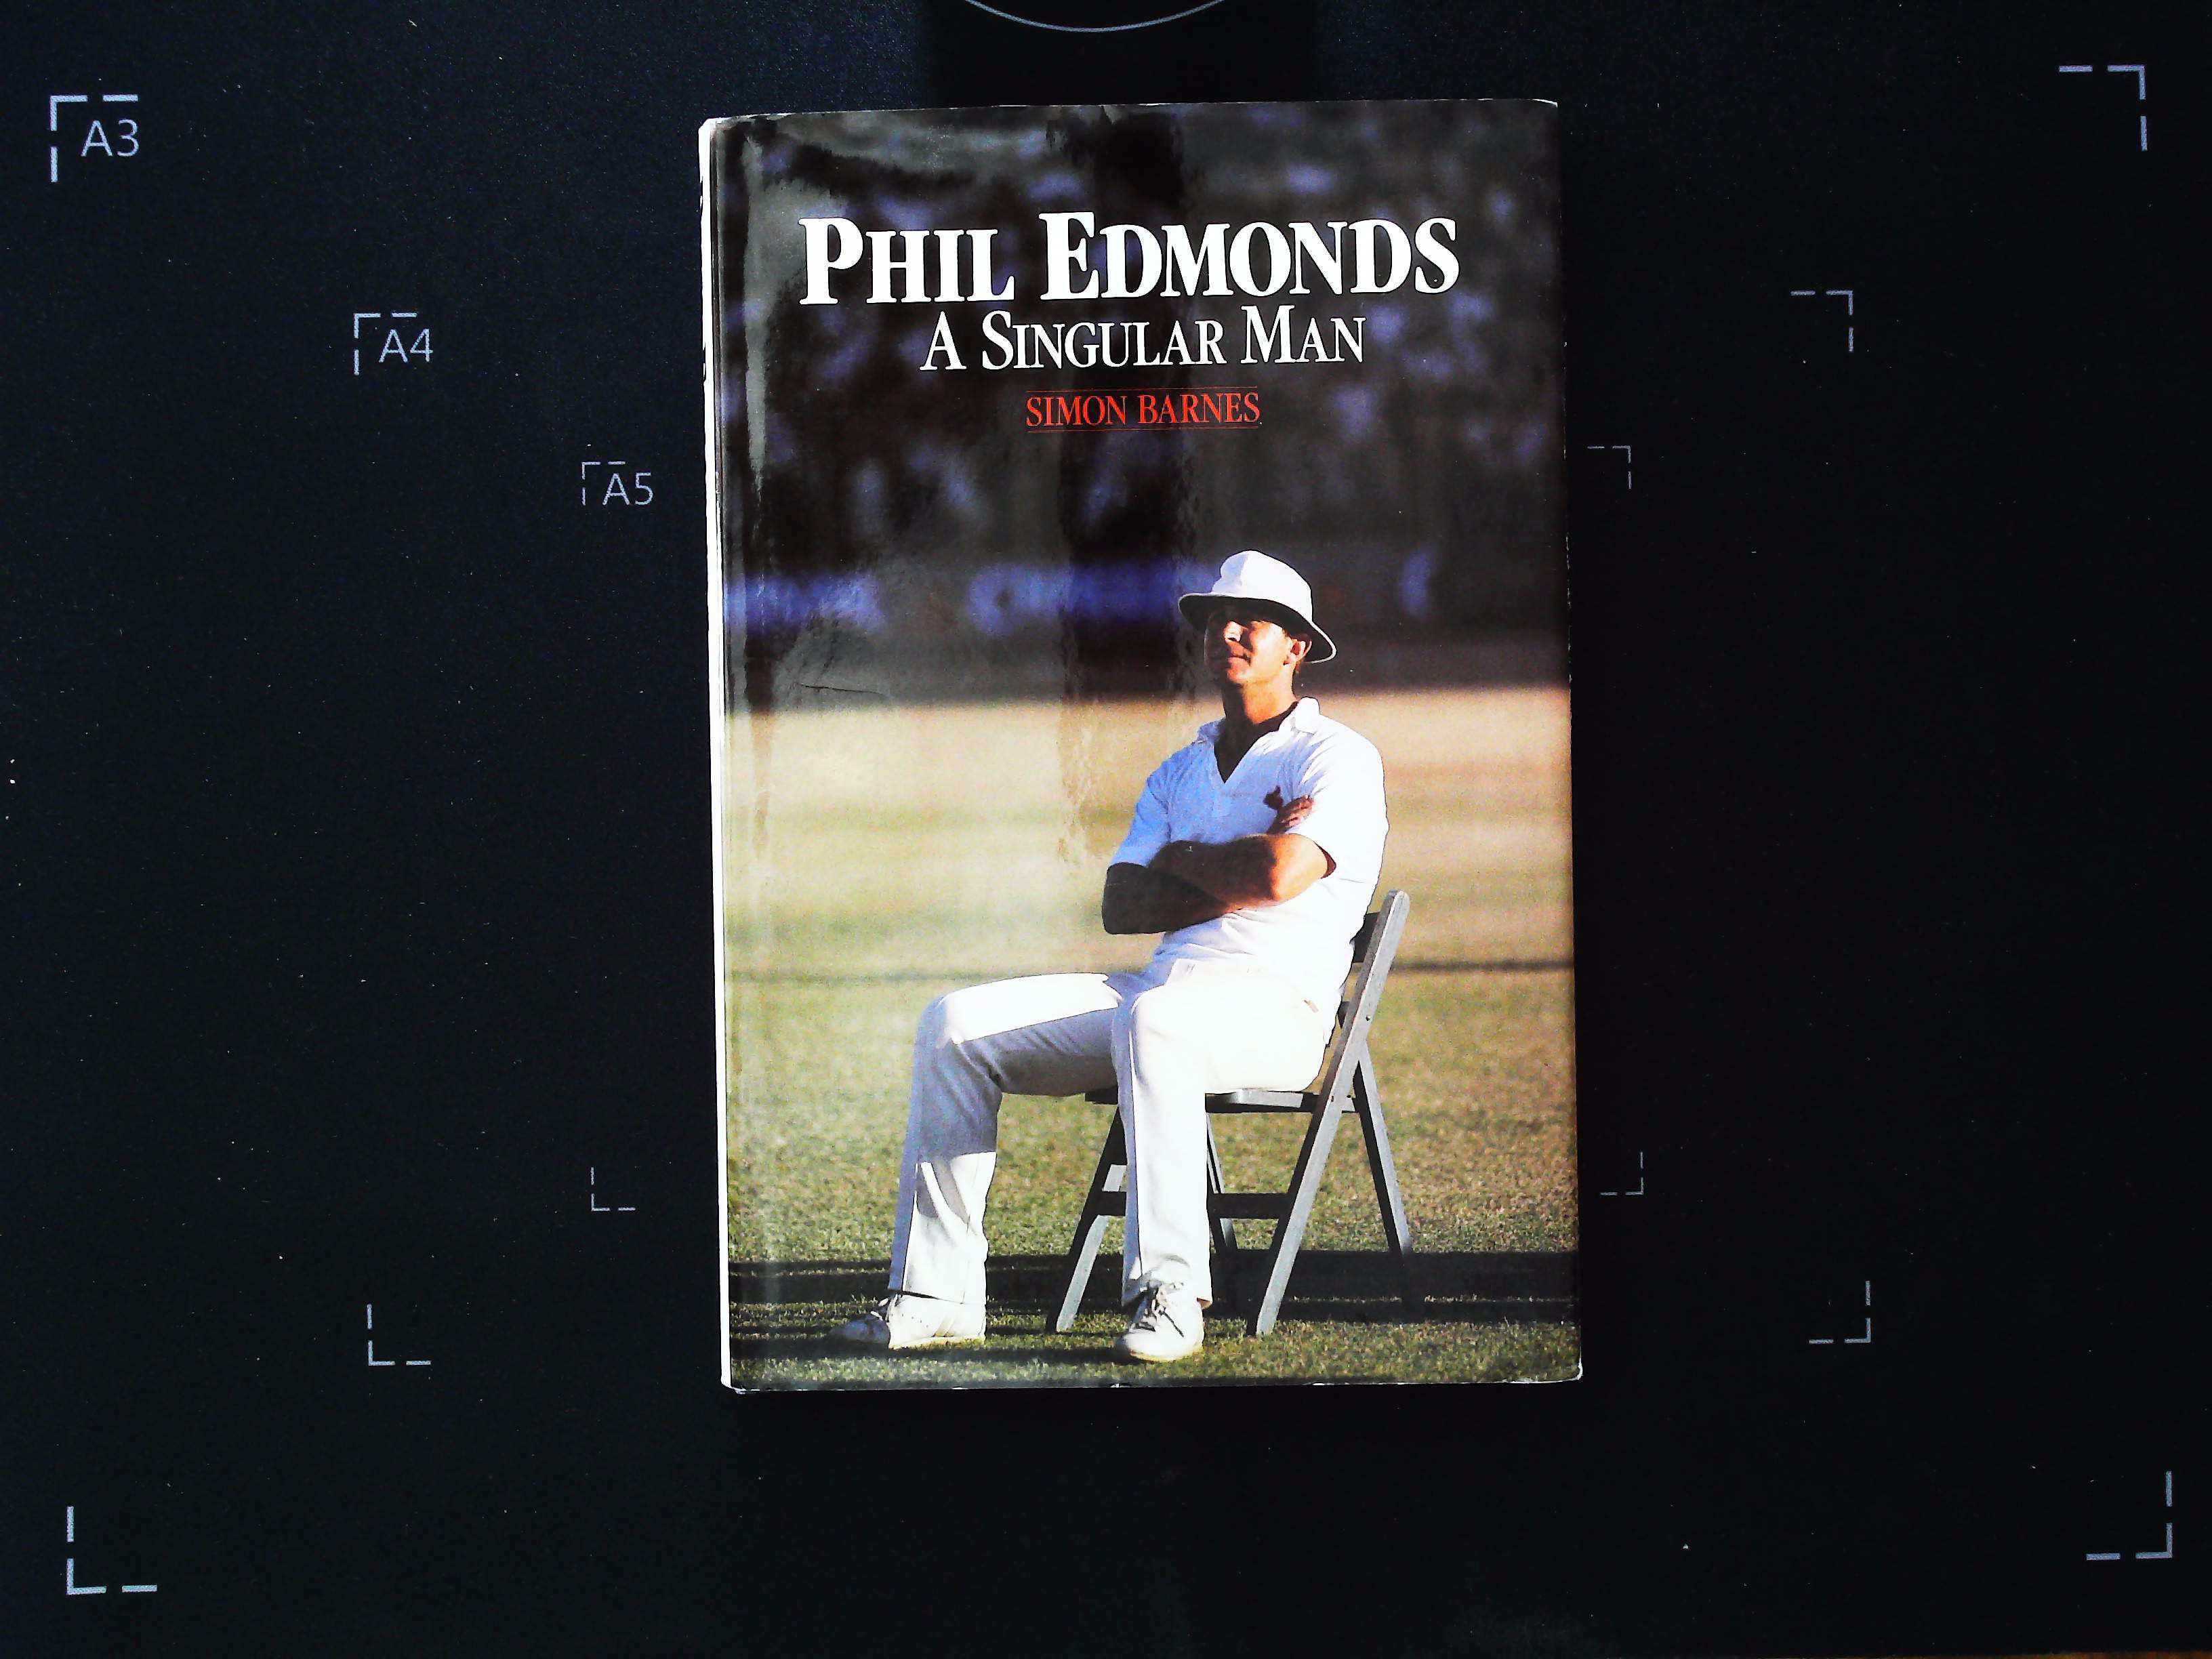 Phil Edmonds A Singular Man First Edition hardback book by Simon Barnes. Signed by Phil Edmonds.